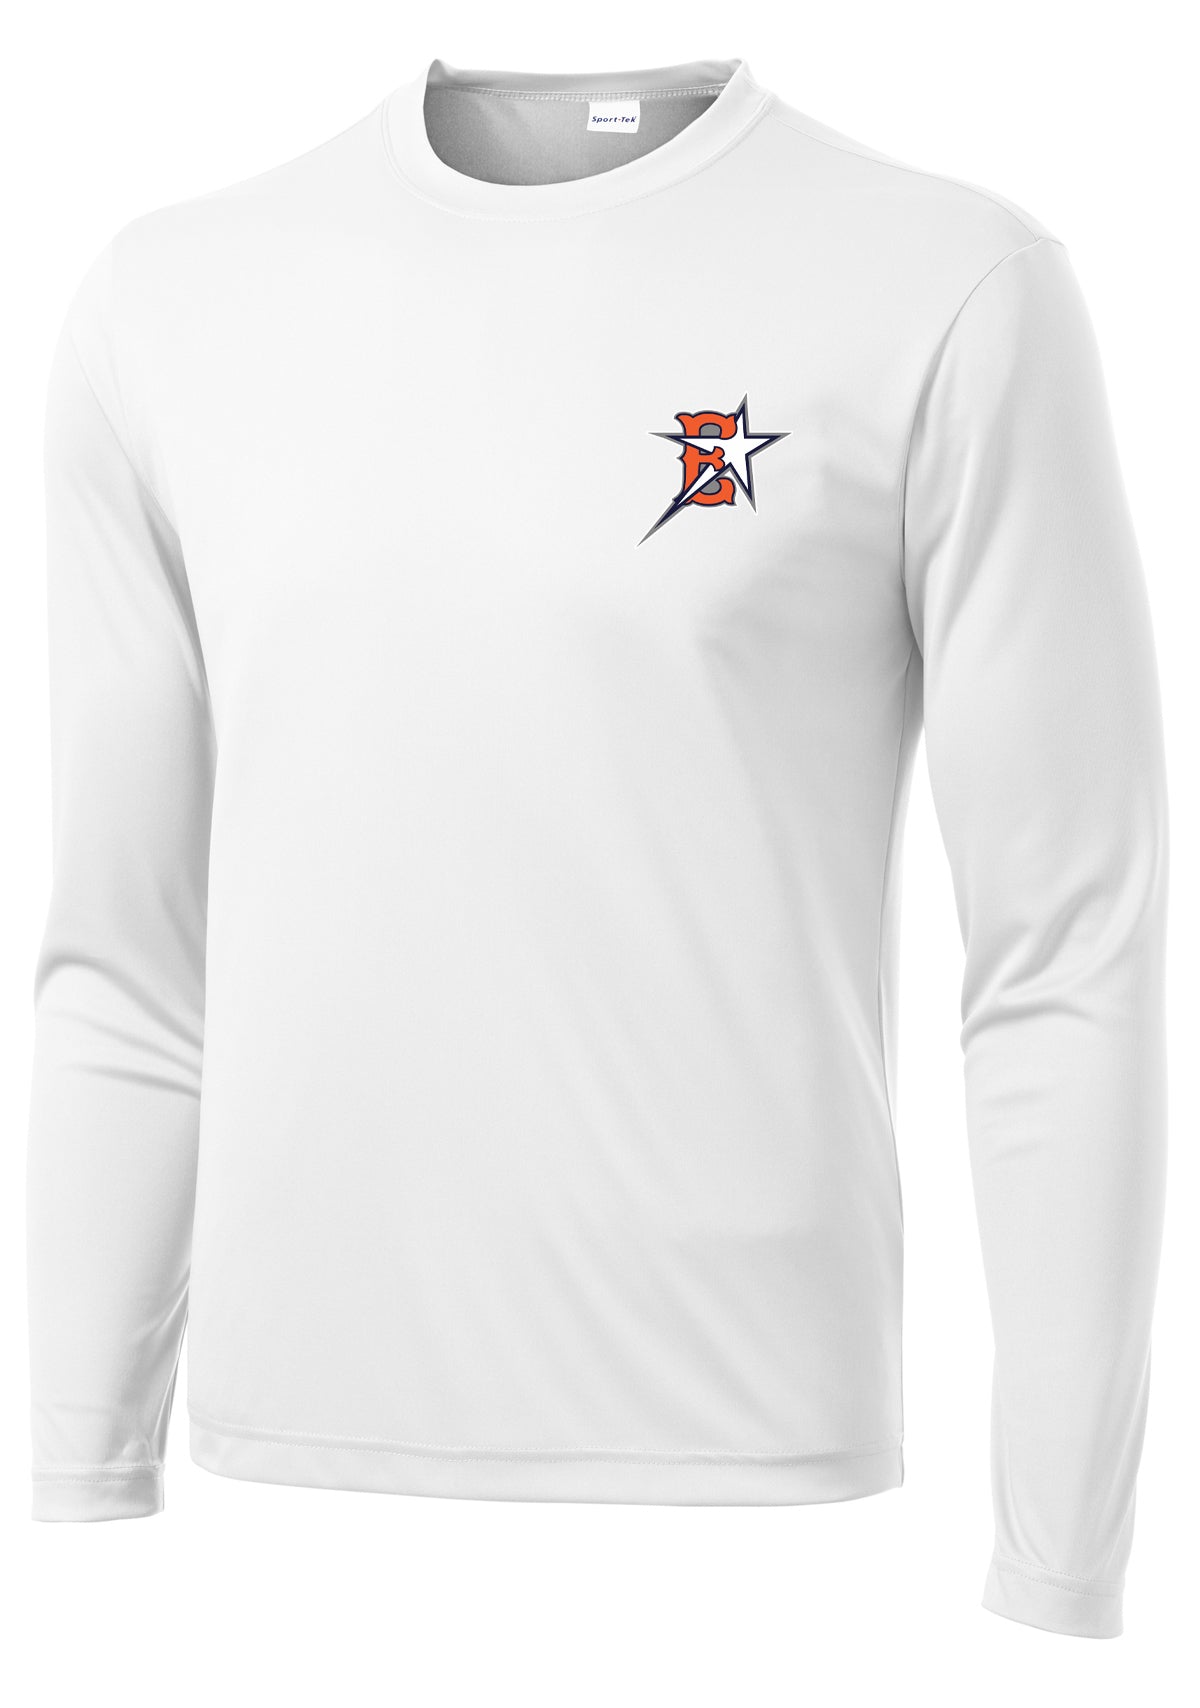 Eastvale Girl's Softball Long Sleeve Performance Shirt